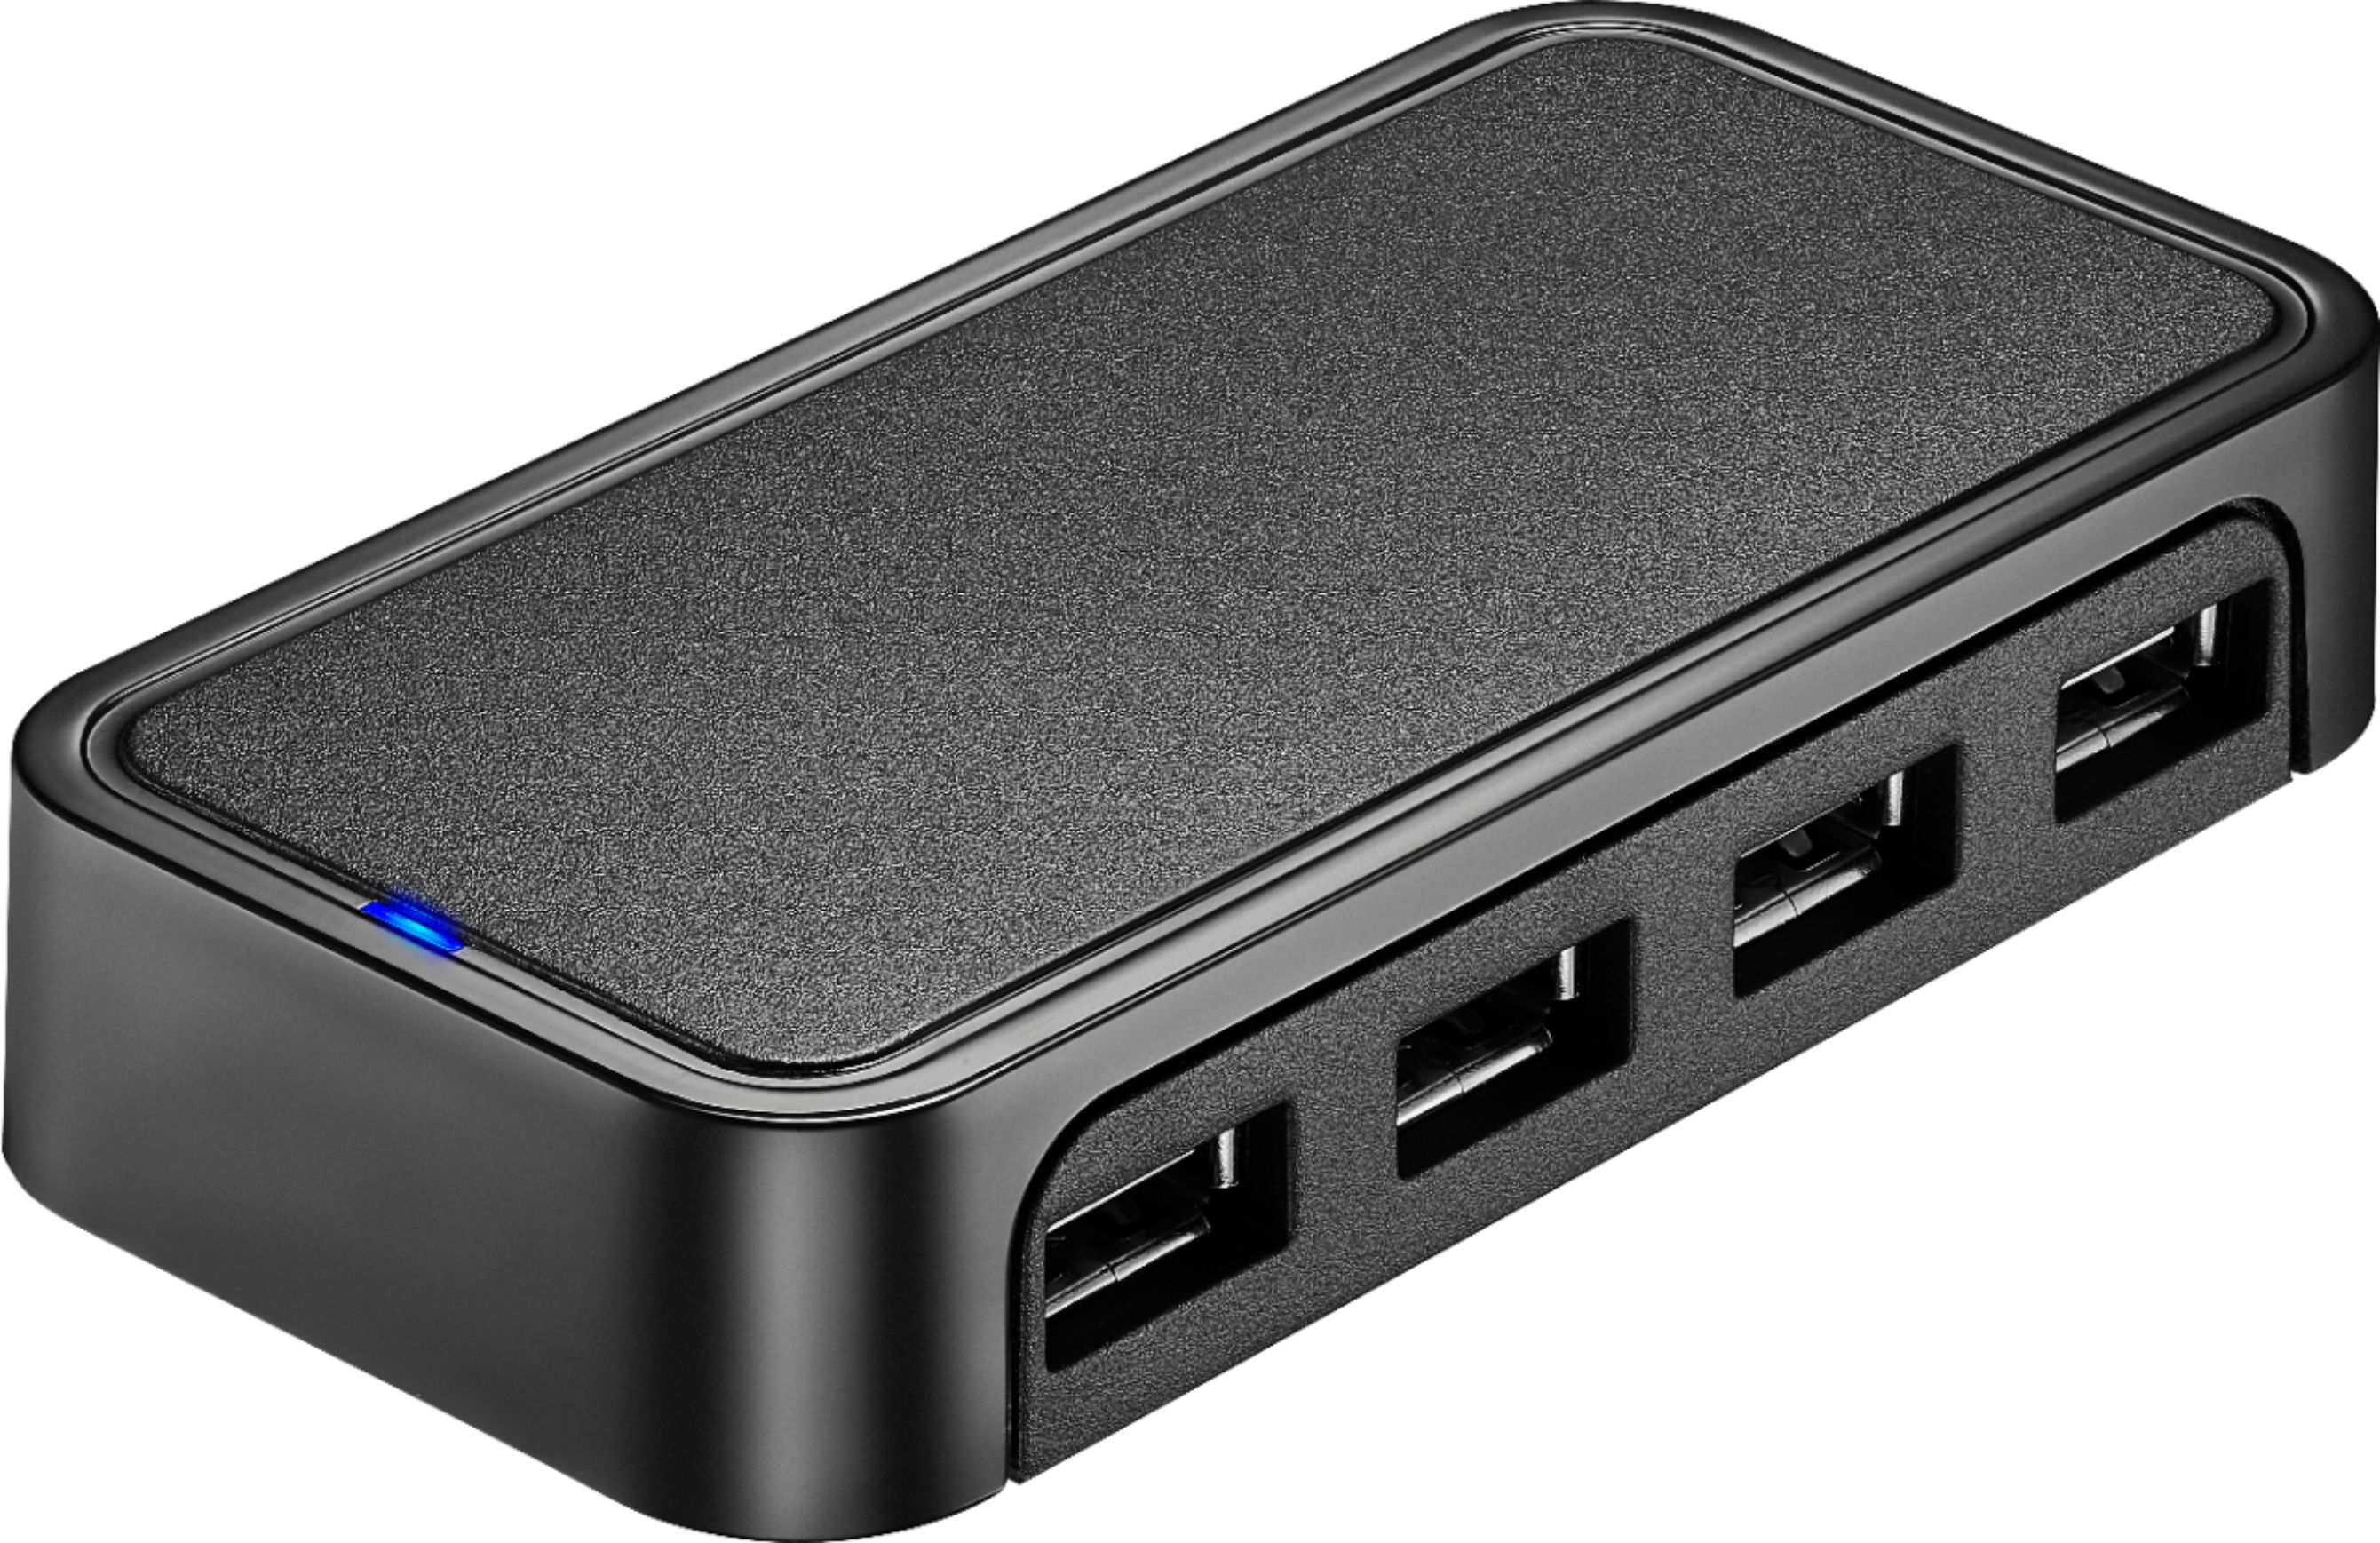 Buy Microsoft Surface USB-C Travel Hub (Ports, Compatibility